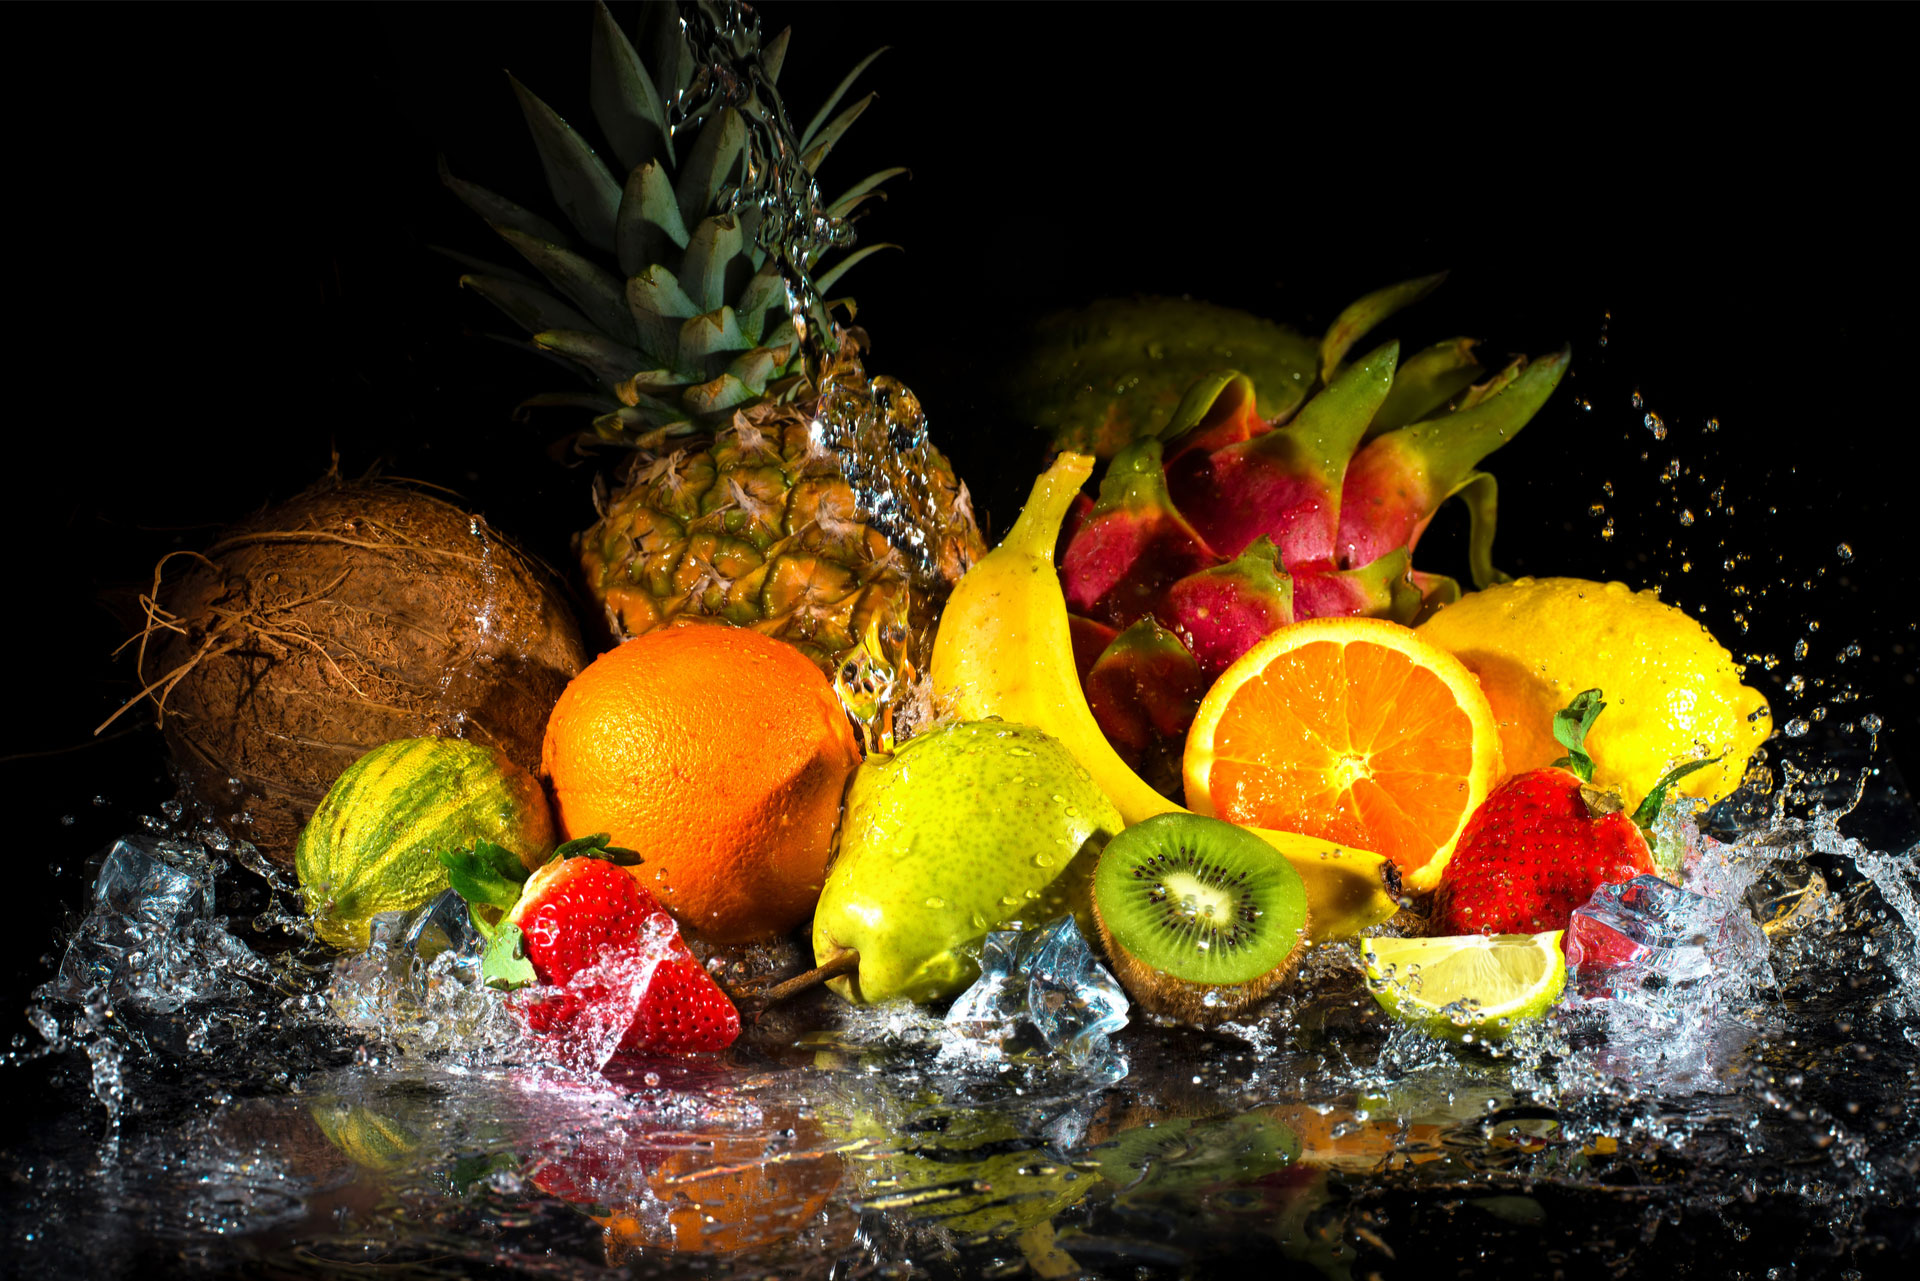 Tropic fruits: Pineapple, coconut, banana, pear, orange, strawberry, kiwi, lemon, dragon fruit